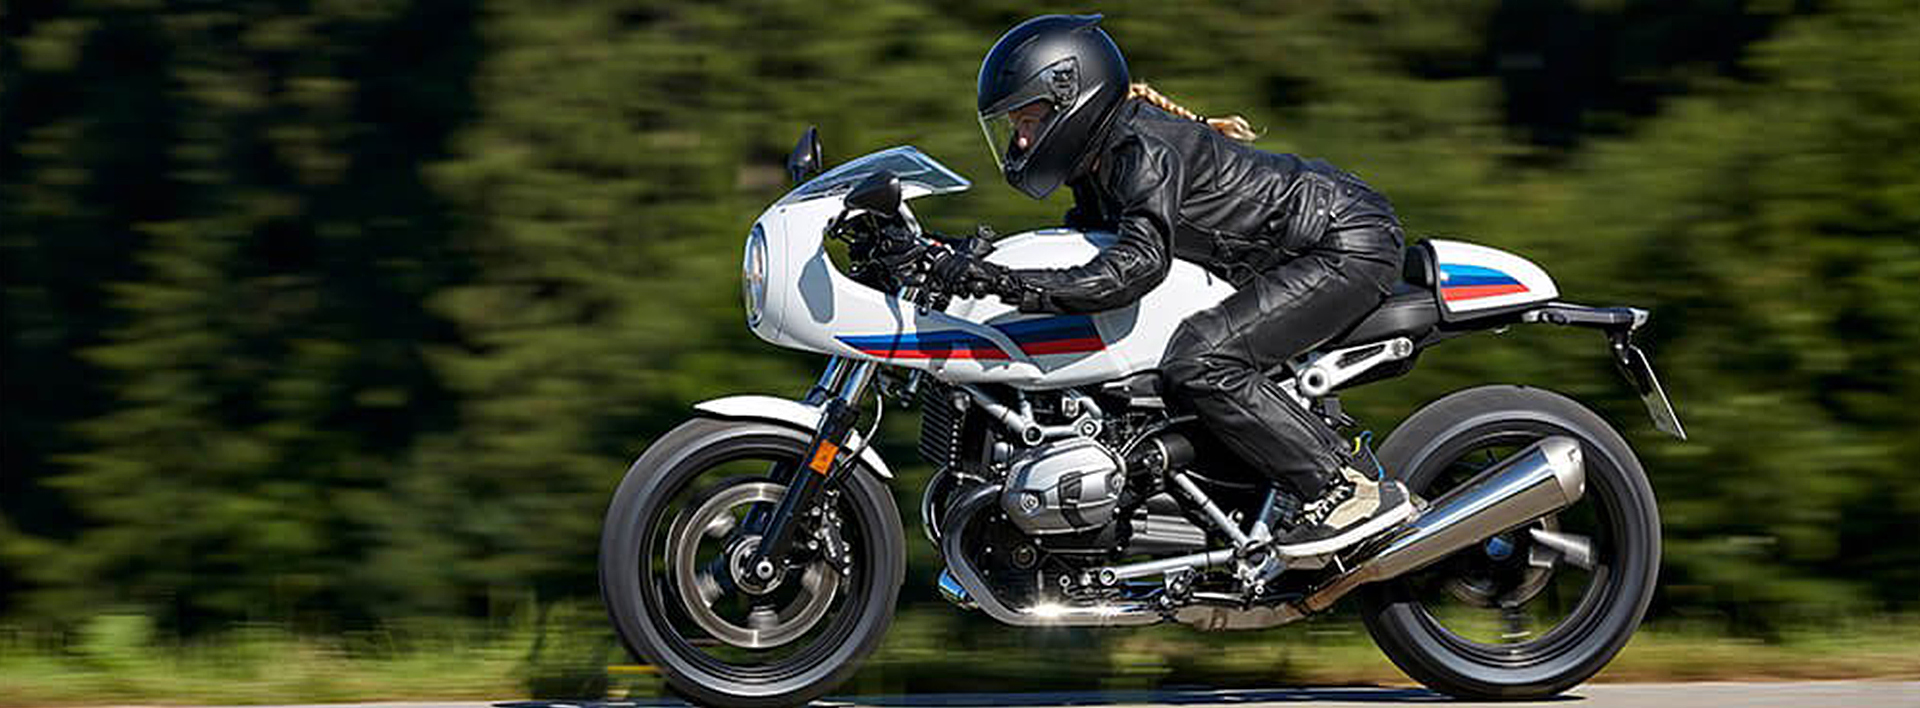 BMW Motorrad Dealer Melbourne | Melbourne BMW Motorcycles | Autosports Group